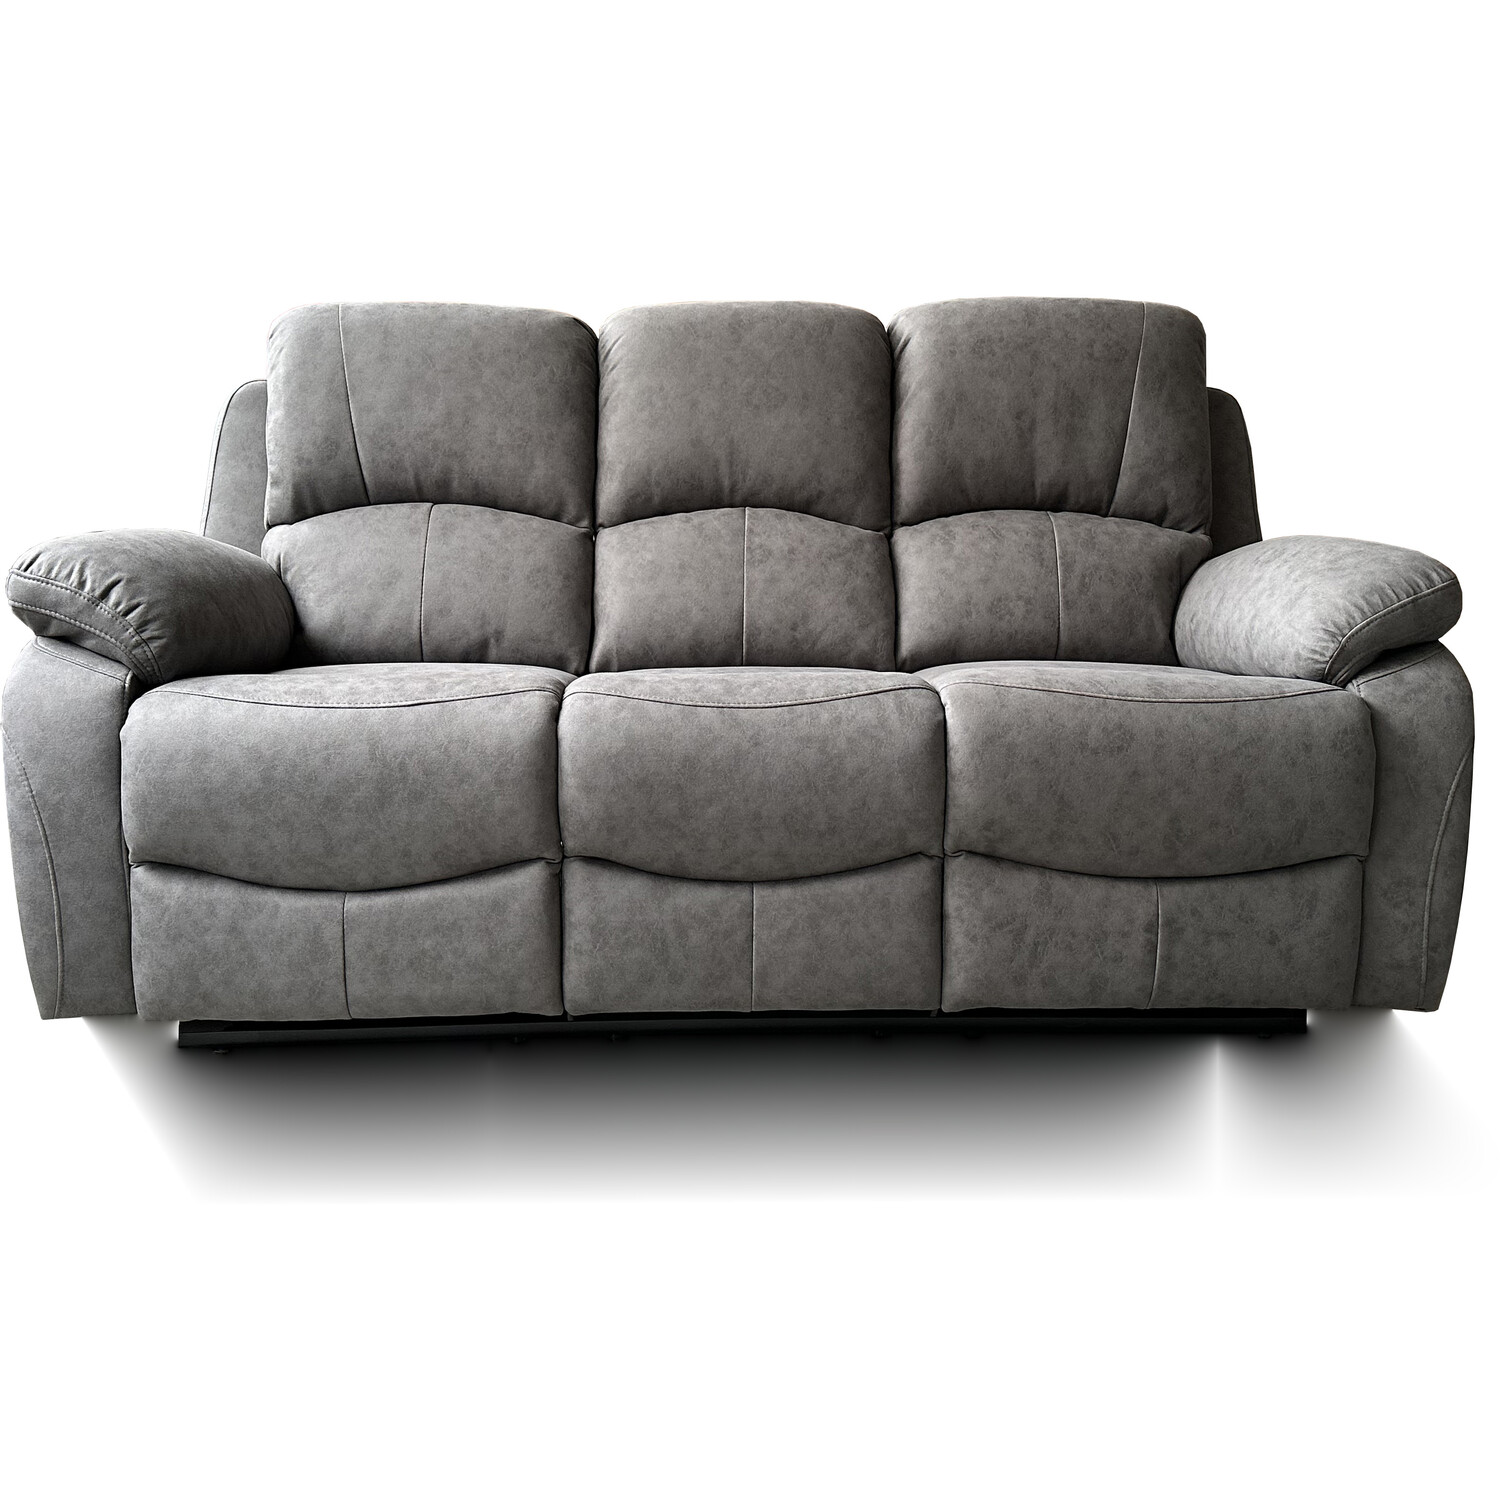 Milano 3 Seater Grey Fabric Recliner Sofa Image 3